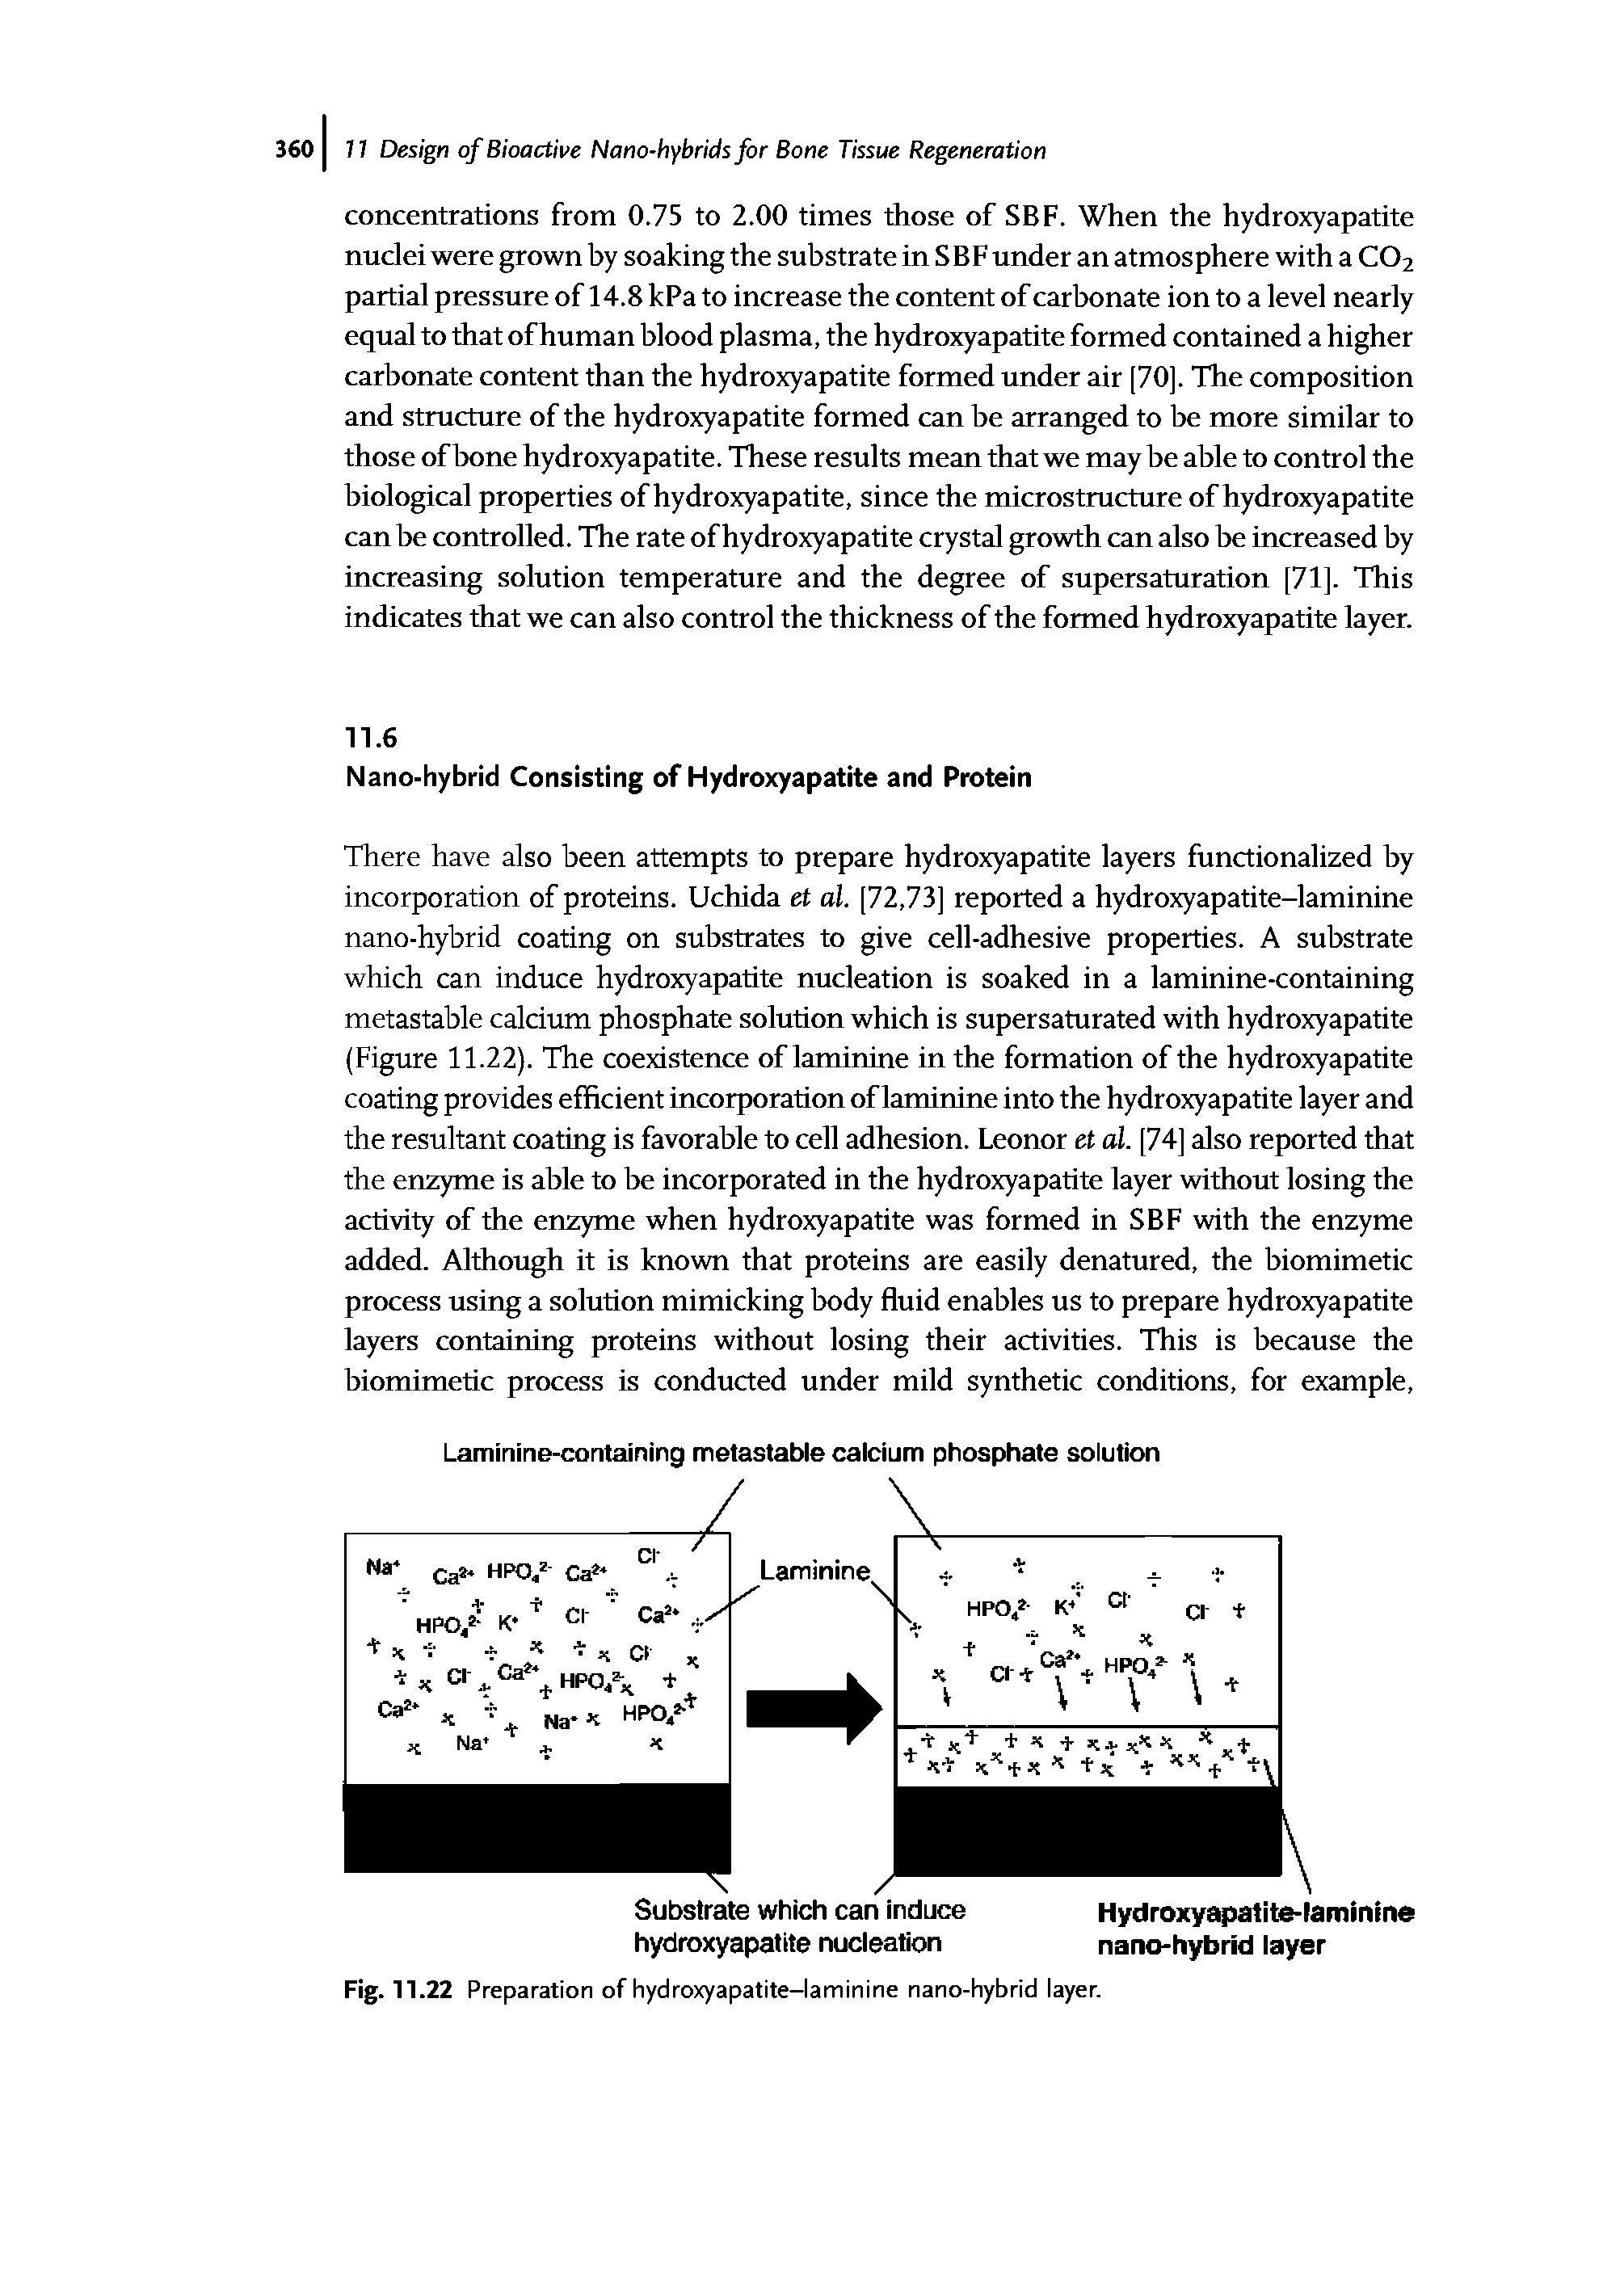 Fig. 11.22 Preparation of hydroxyapatite-laminine nano-hybrid layer.